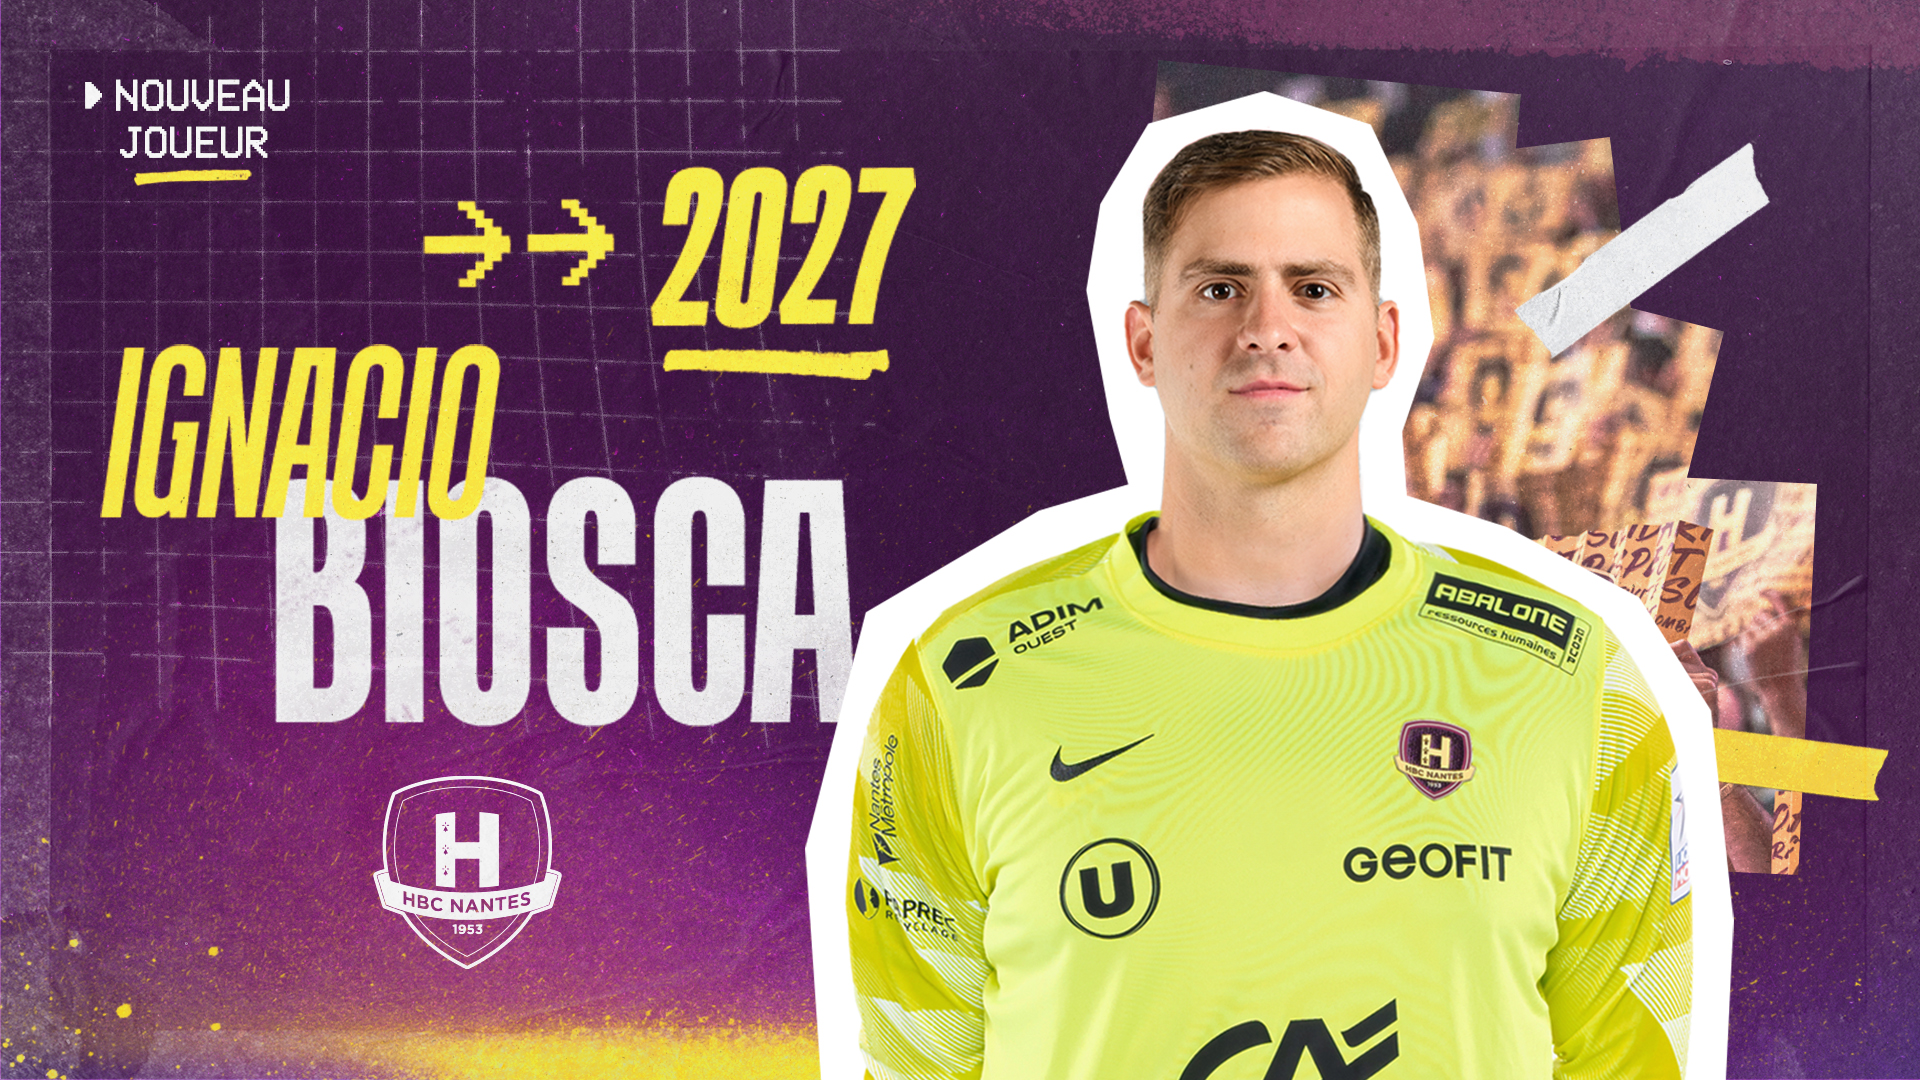 Ignacio Biosca au HBC Nantes jusqu’en 2027